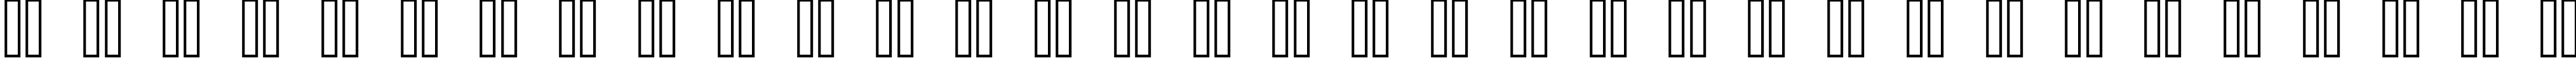 Пример написания русского алфавита шрифтом mono 07_56